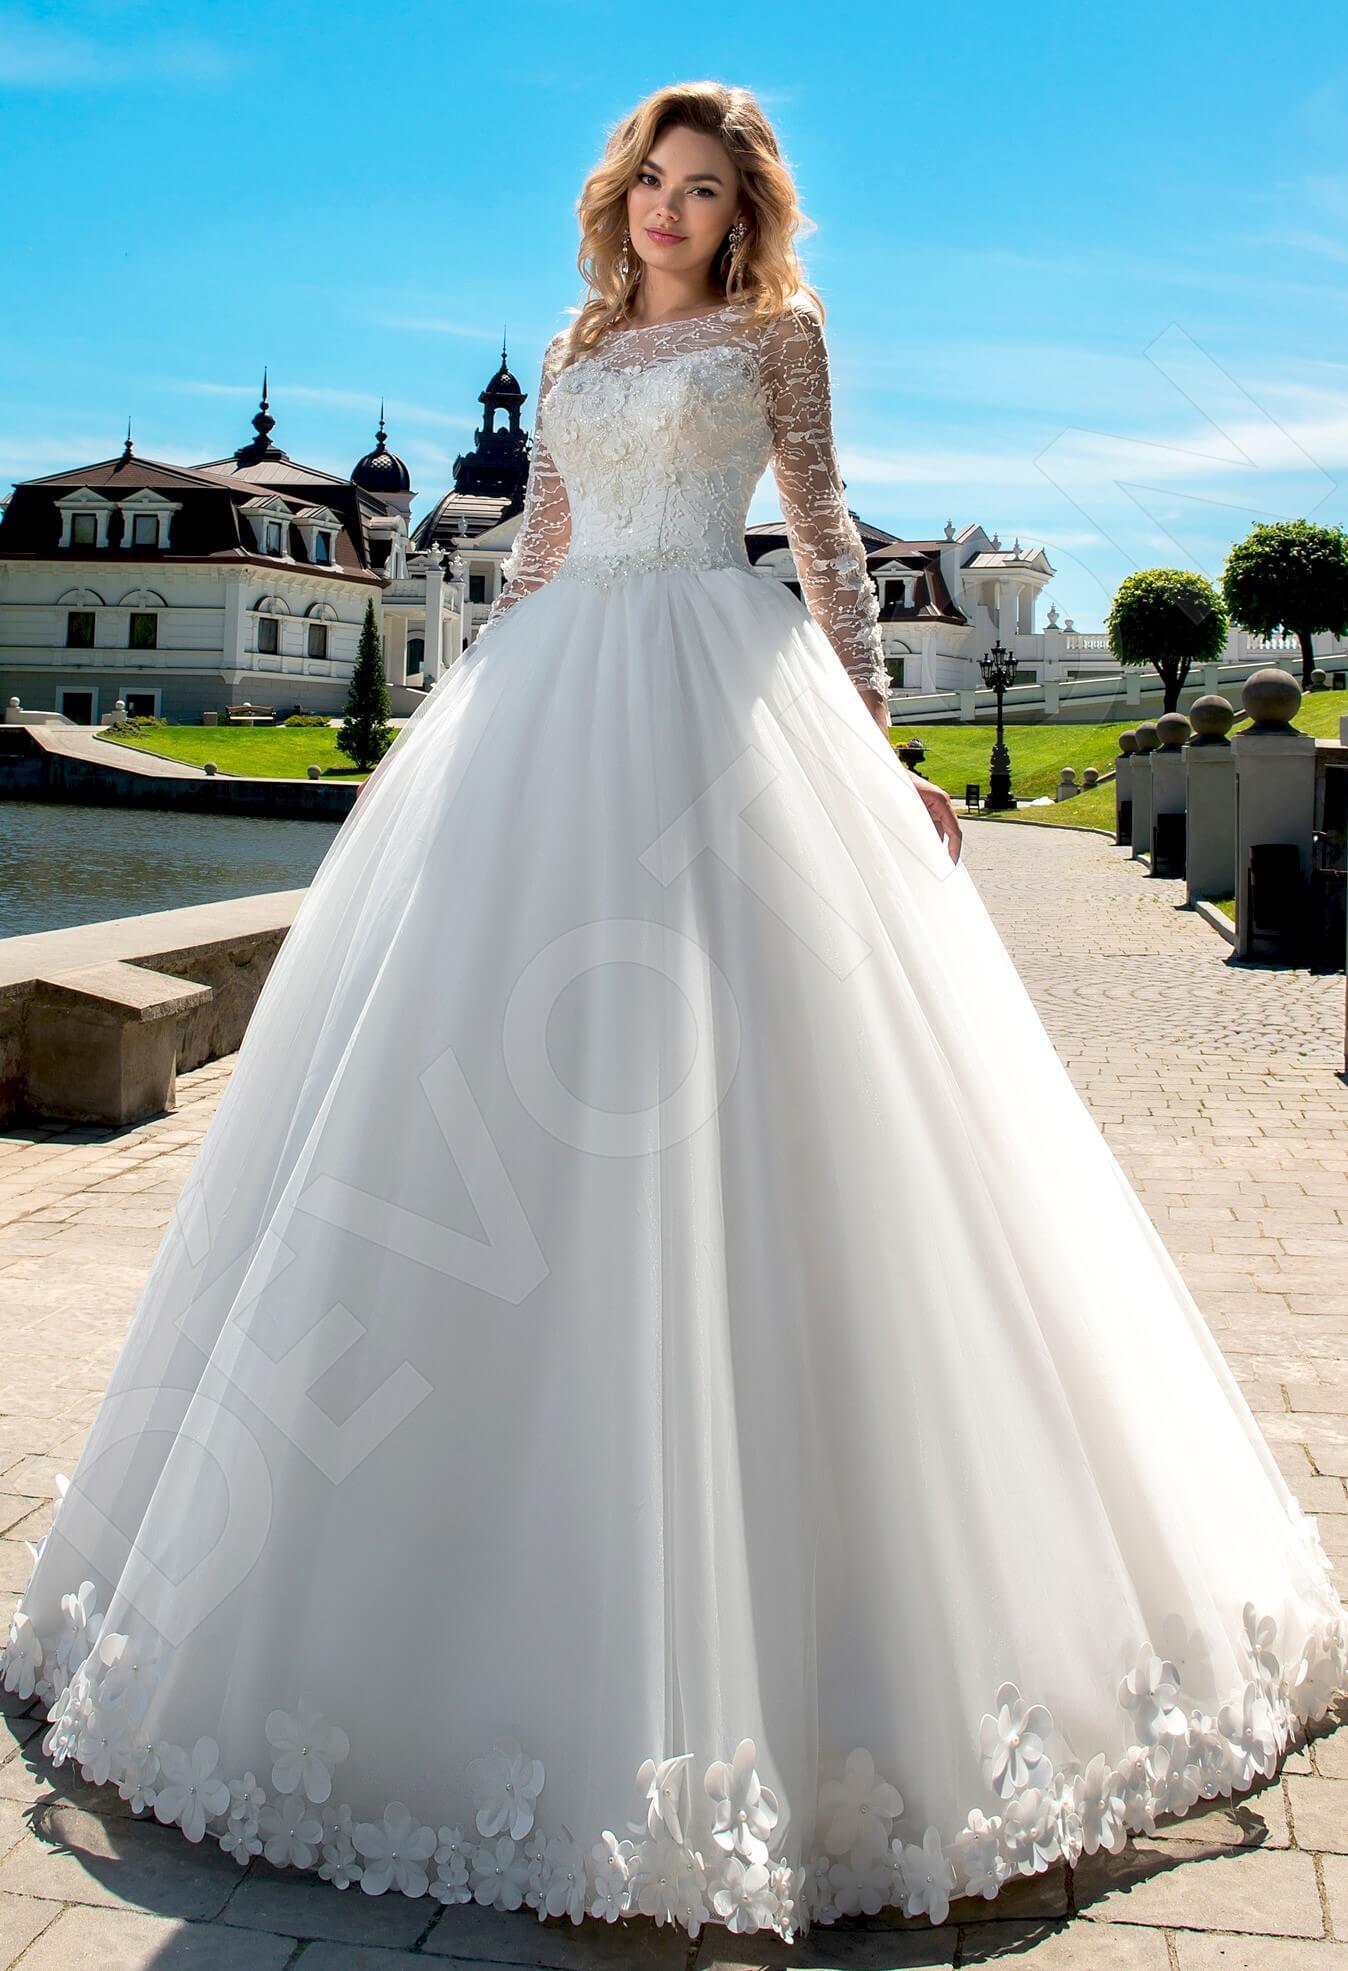 Ginger Open back Princess/Ball Gown Long sleeve Wedding Dress Front